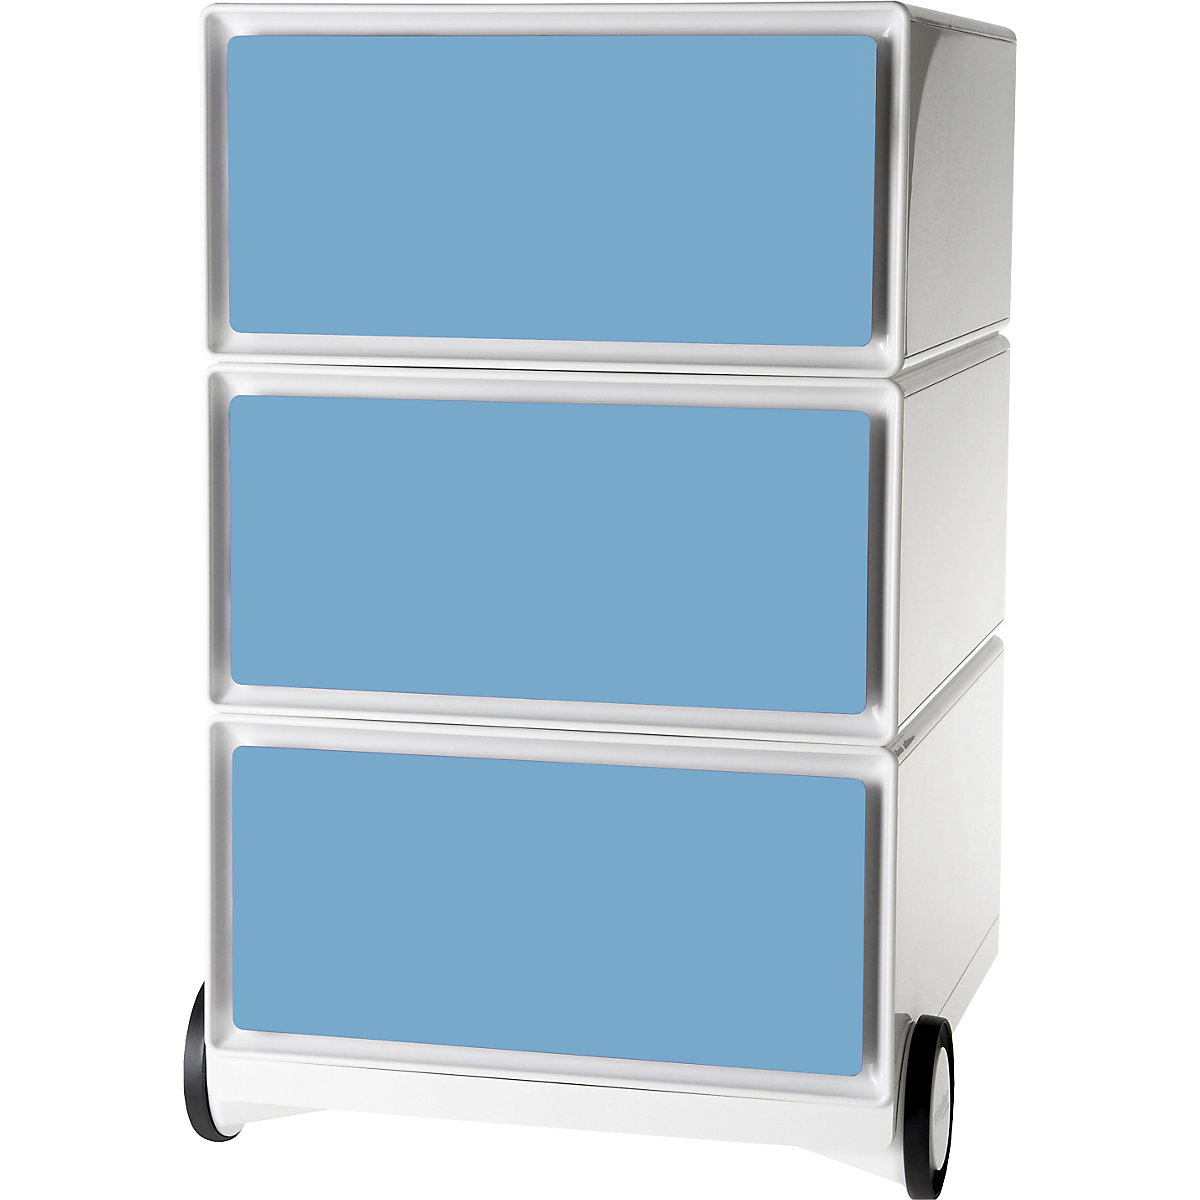 Pokretni ladičar easyBox® – Paperflow, 3 ladice, u bijeloj / plavoj boji